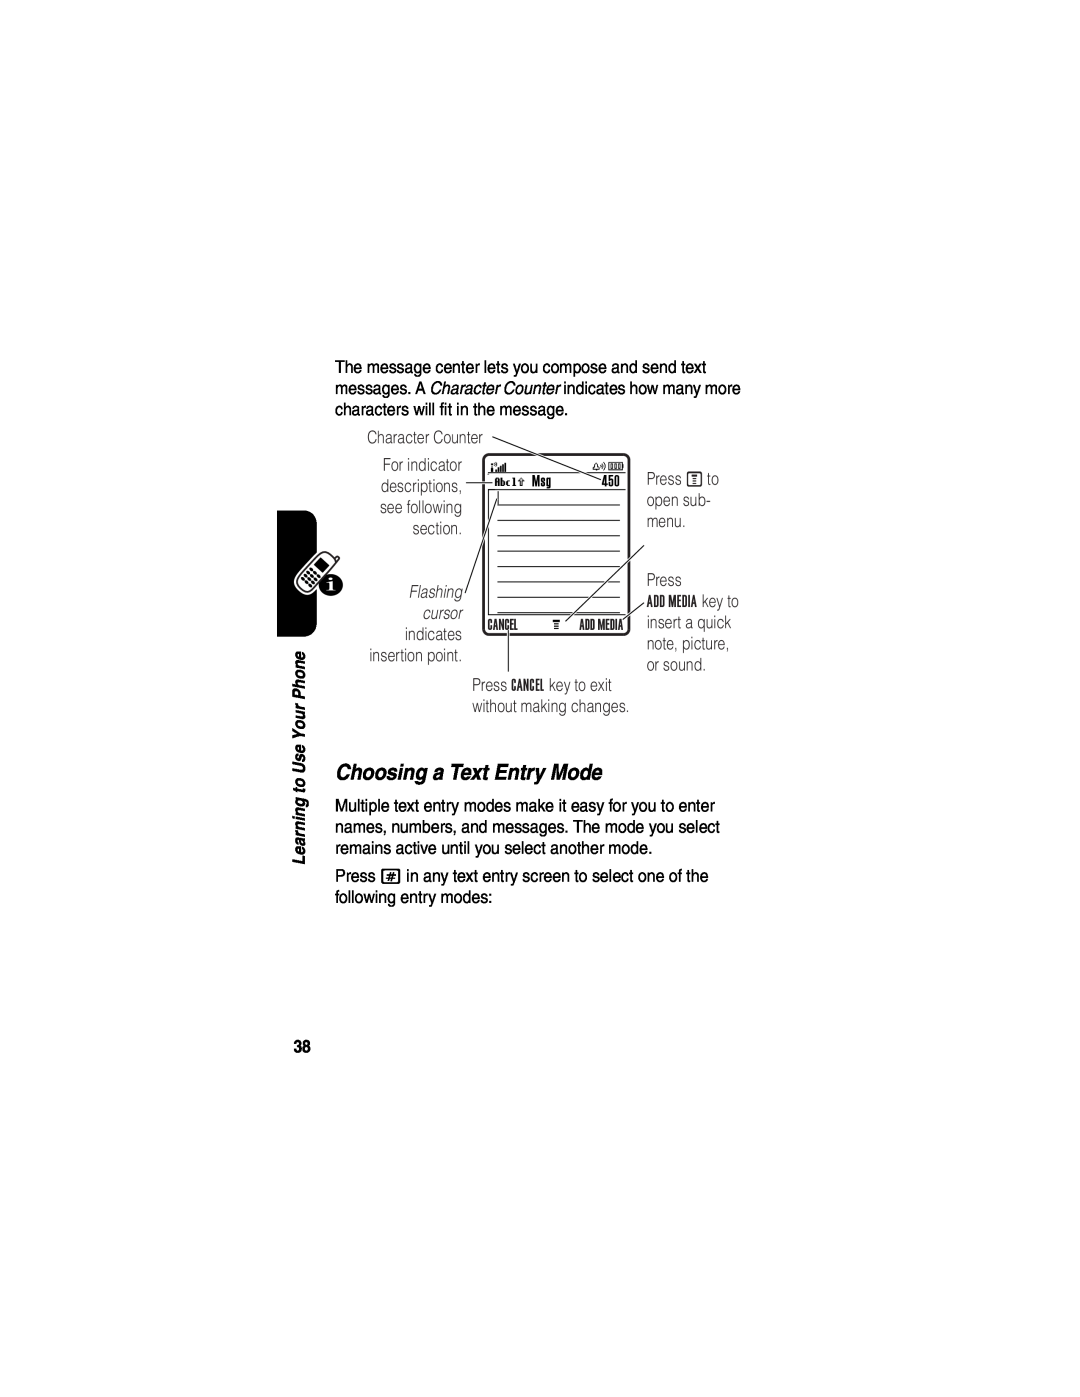 Motorola V635 manual Choosing a Text Entry Mode, Flashing, cursor 